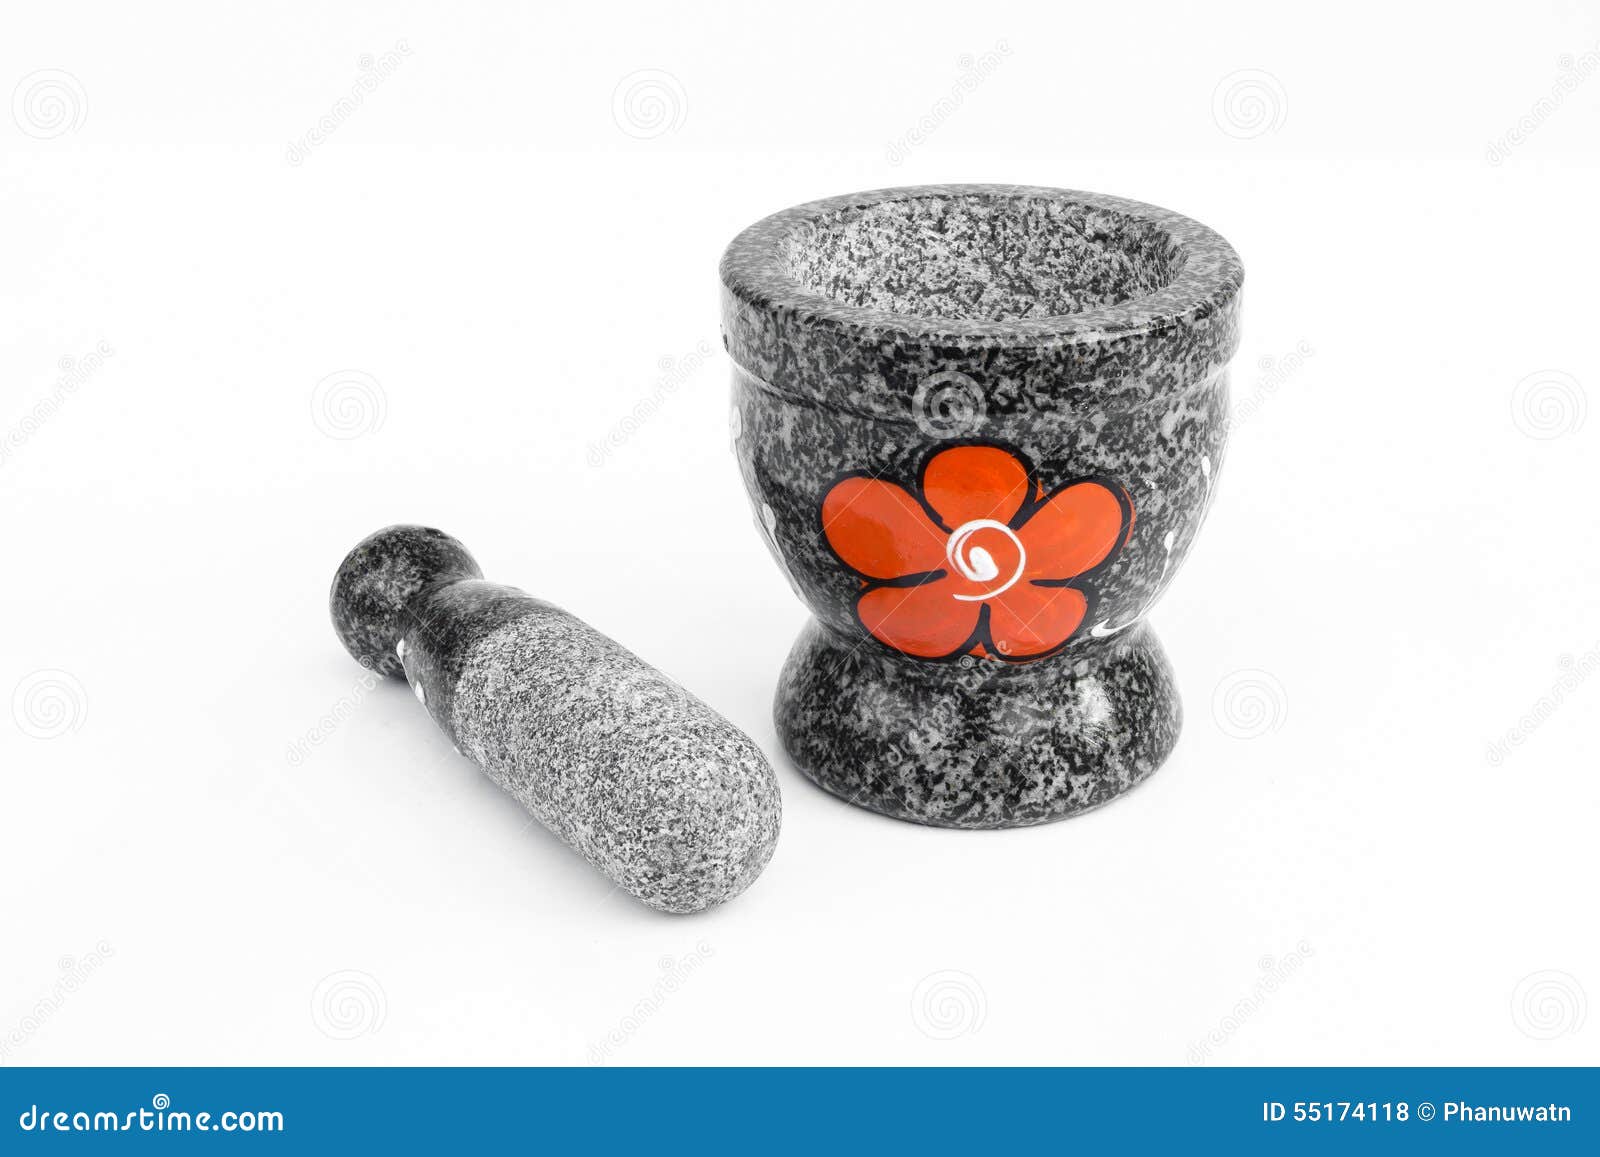 https://thumbs.dreamstime.com/z/small-granite-mortar-pestle-thai-handmade-souvenir-chonburi-thailand-55174118.jpg